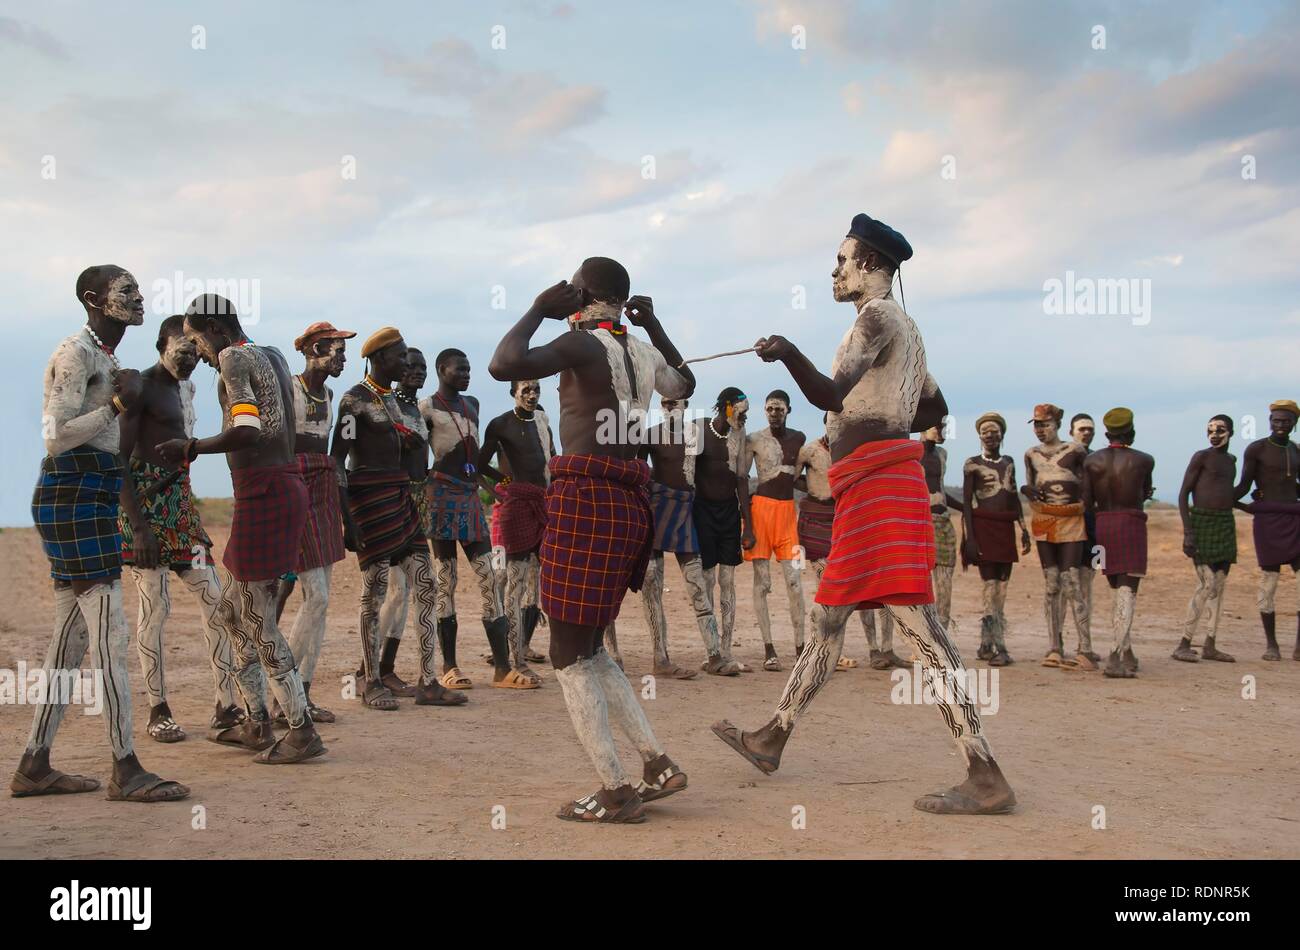 Nyangatom, Bumi, tribal dance ceremony, Omo river Valley, Ethiopia, Africa Stock Photo